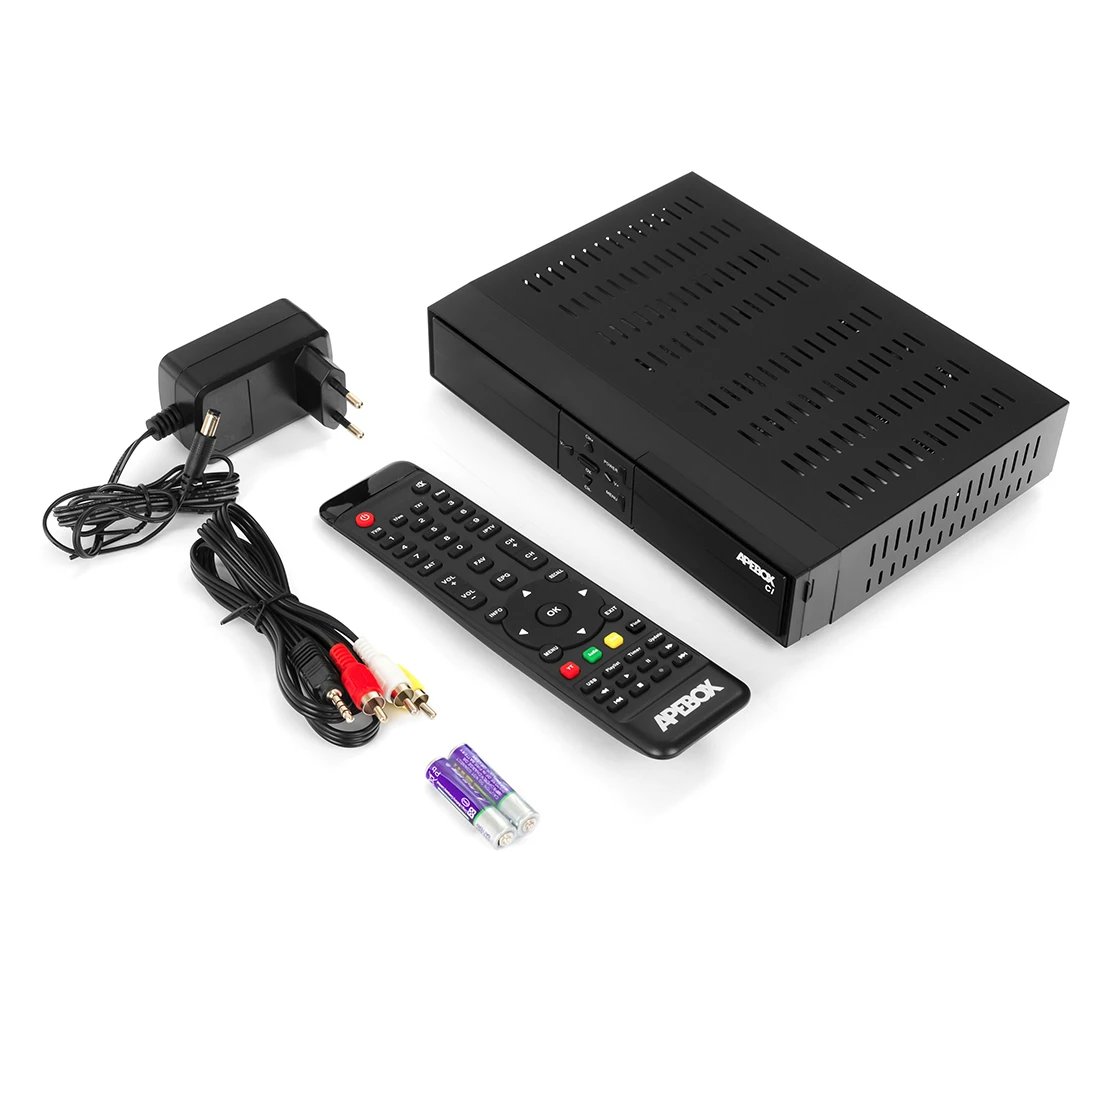  APEBOX CI COMBO DVB-S2 + DVB-T2/C H.265 IPTV